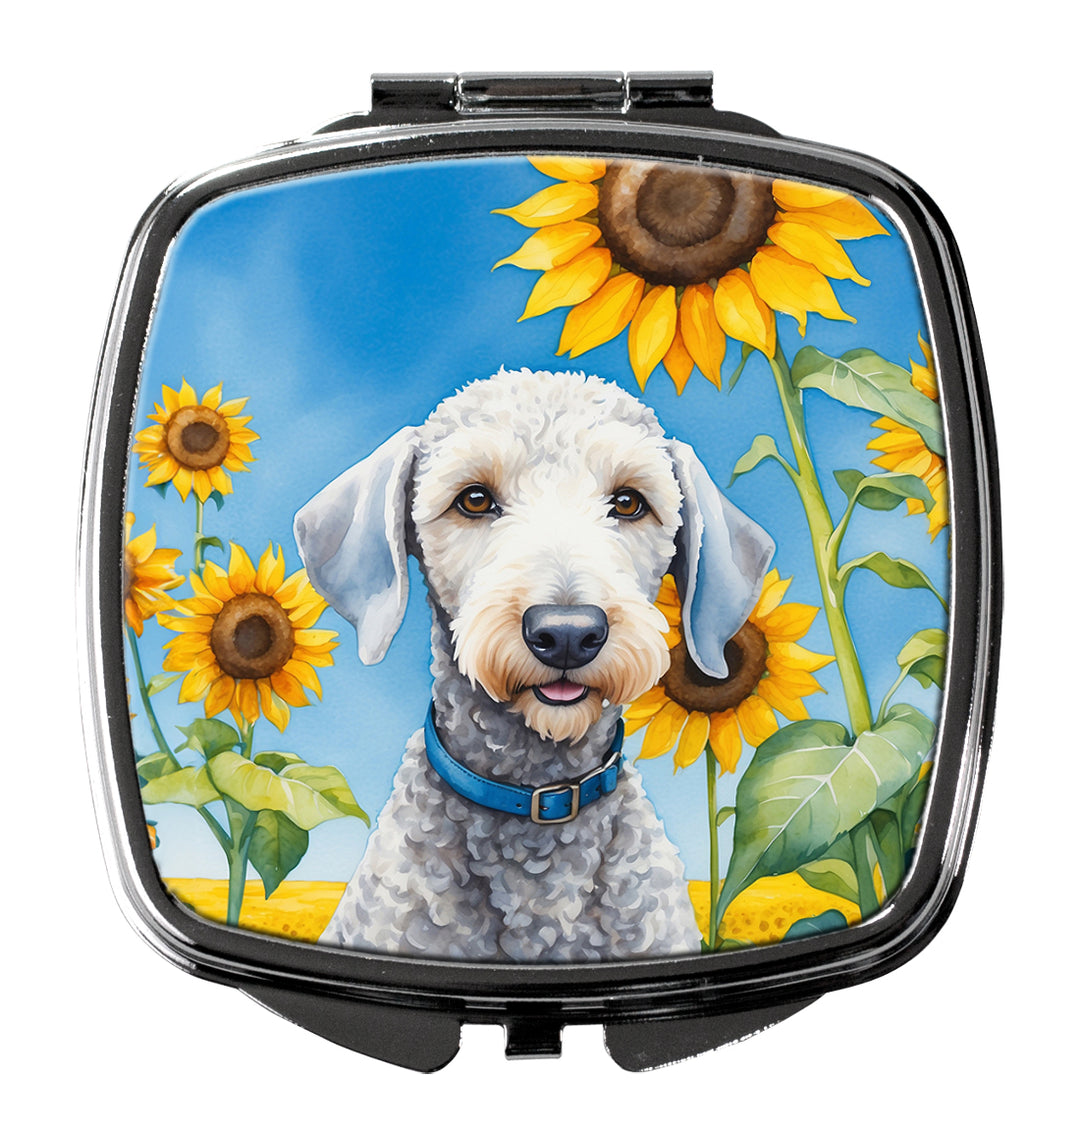 Bedlington Terrier in Sunflowers Compact Mirror Image 1